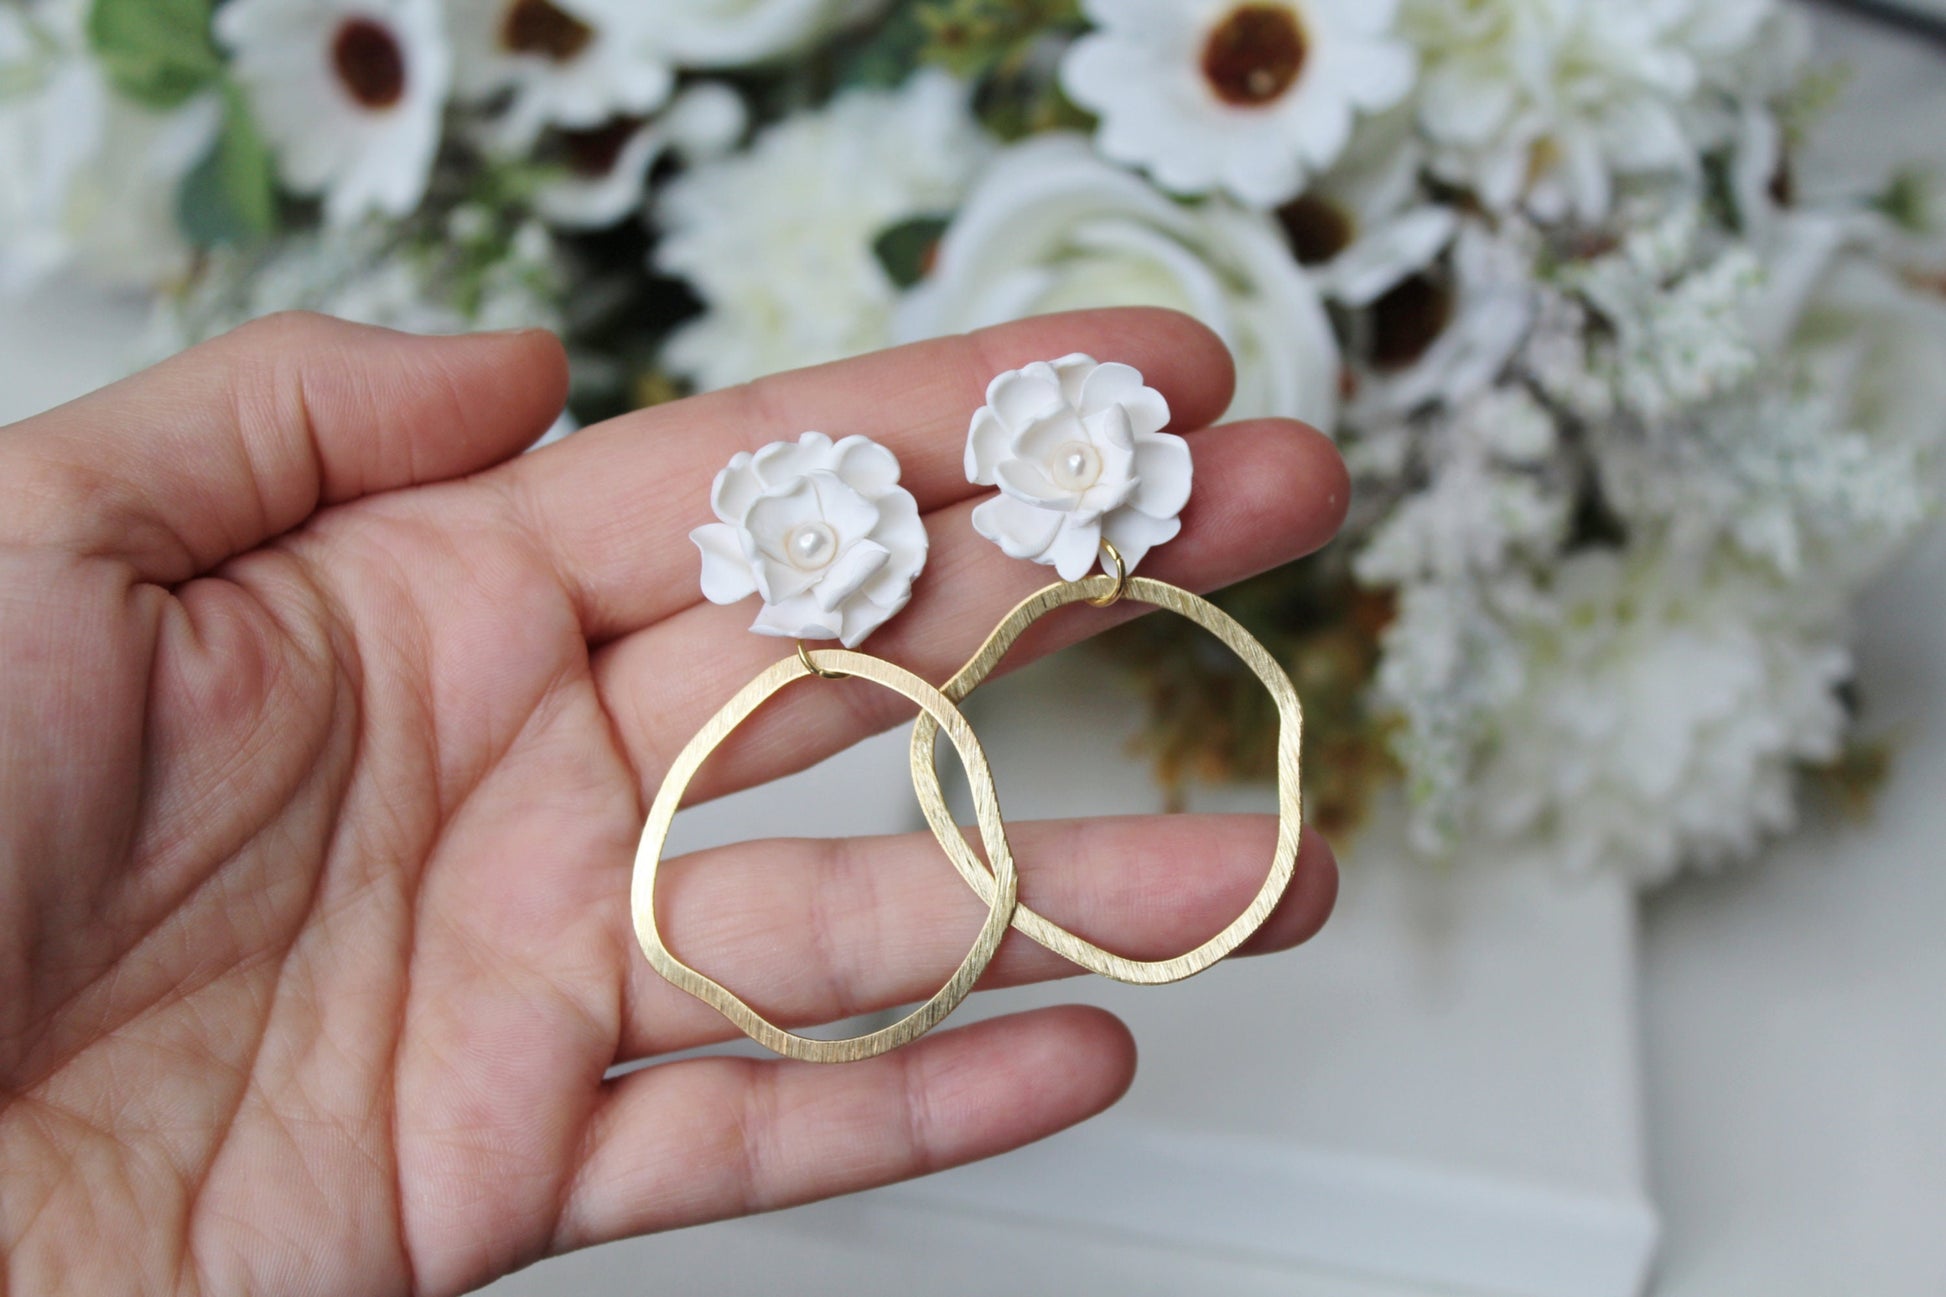 Bridal Flower Earrings, Wedding Earrings, White, Floral Earrings, Flower Earrings, Polymer Clay Earrings, Spring Earrings, Earrings,Handmade